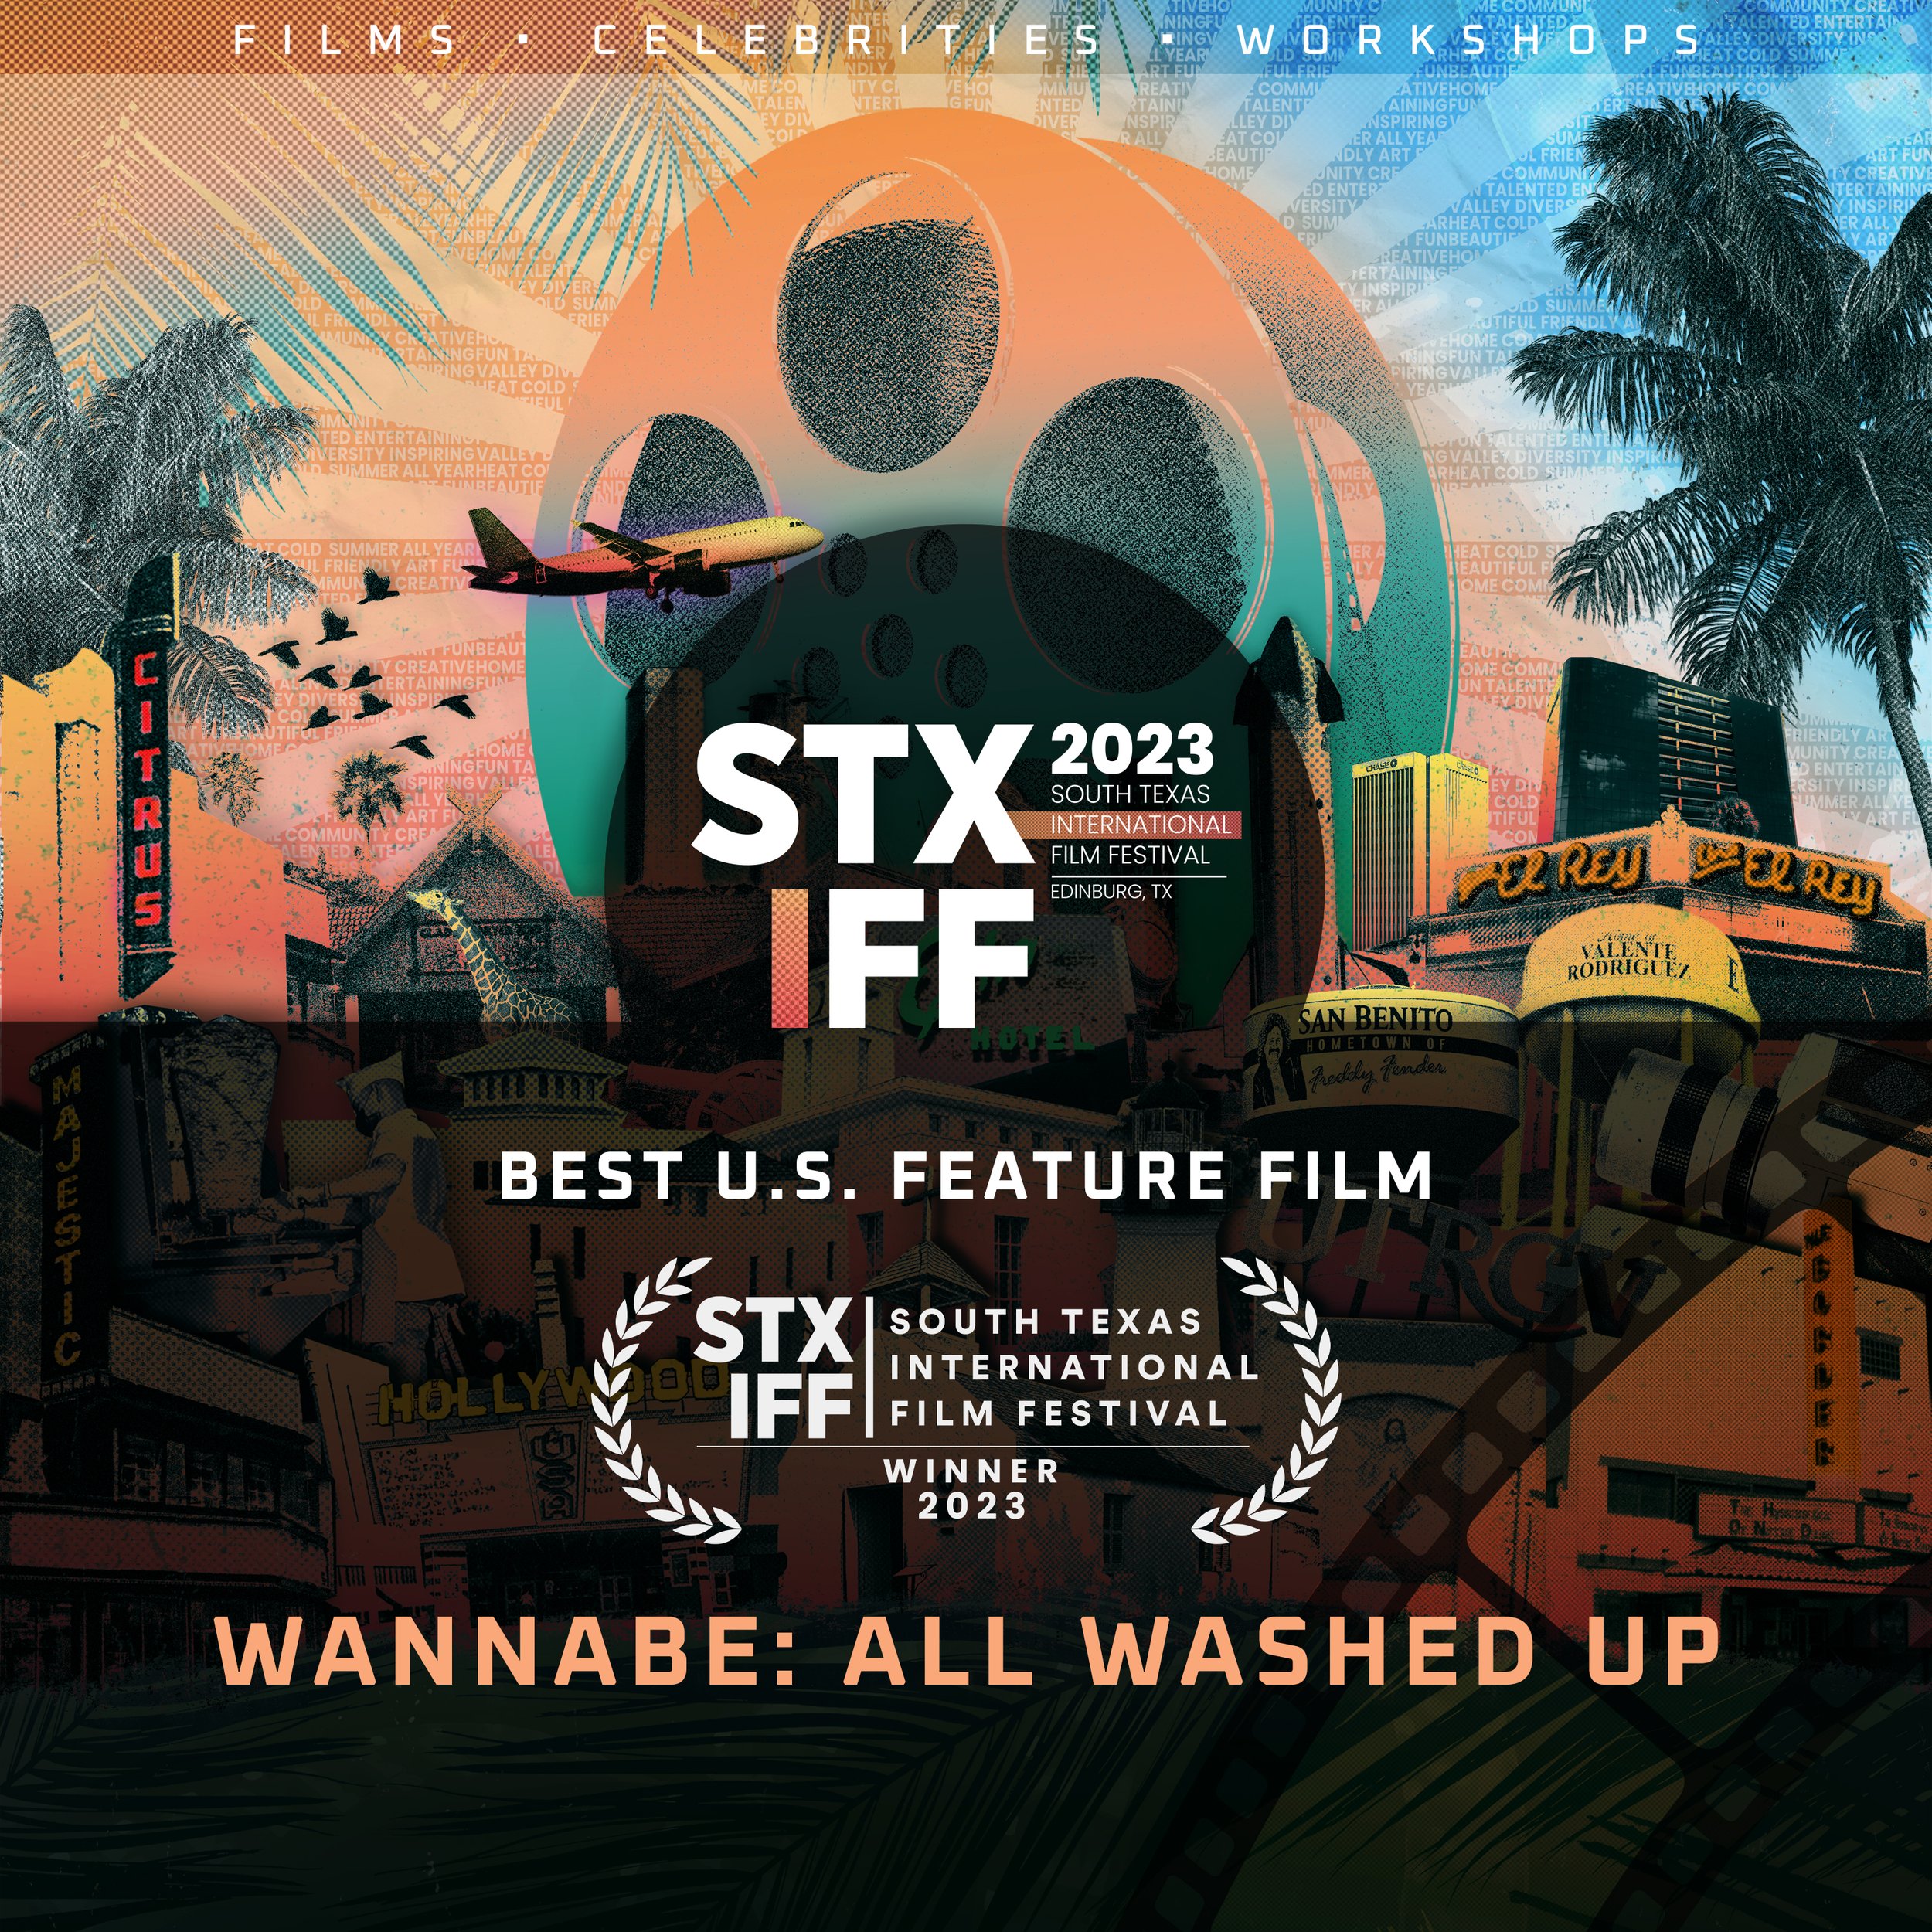 Copy of STXIFF23_Winner-BEST U.S FEATURE FILM.jpg